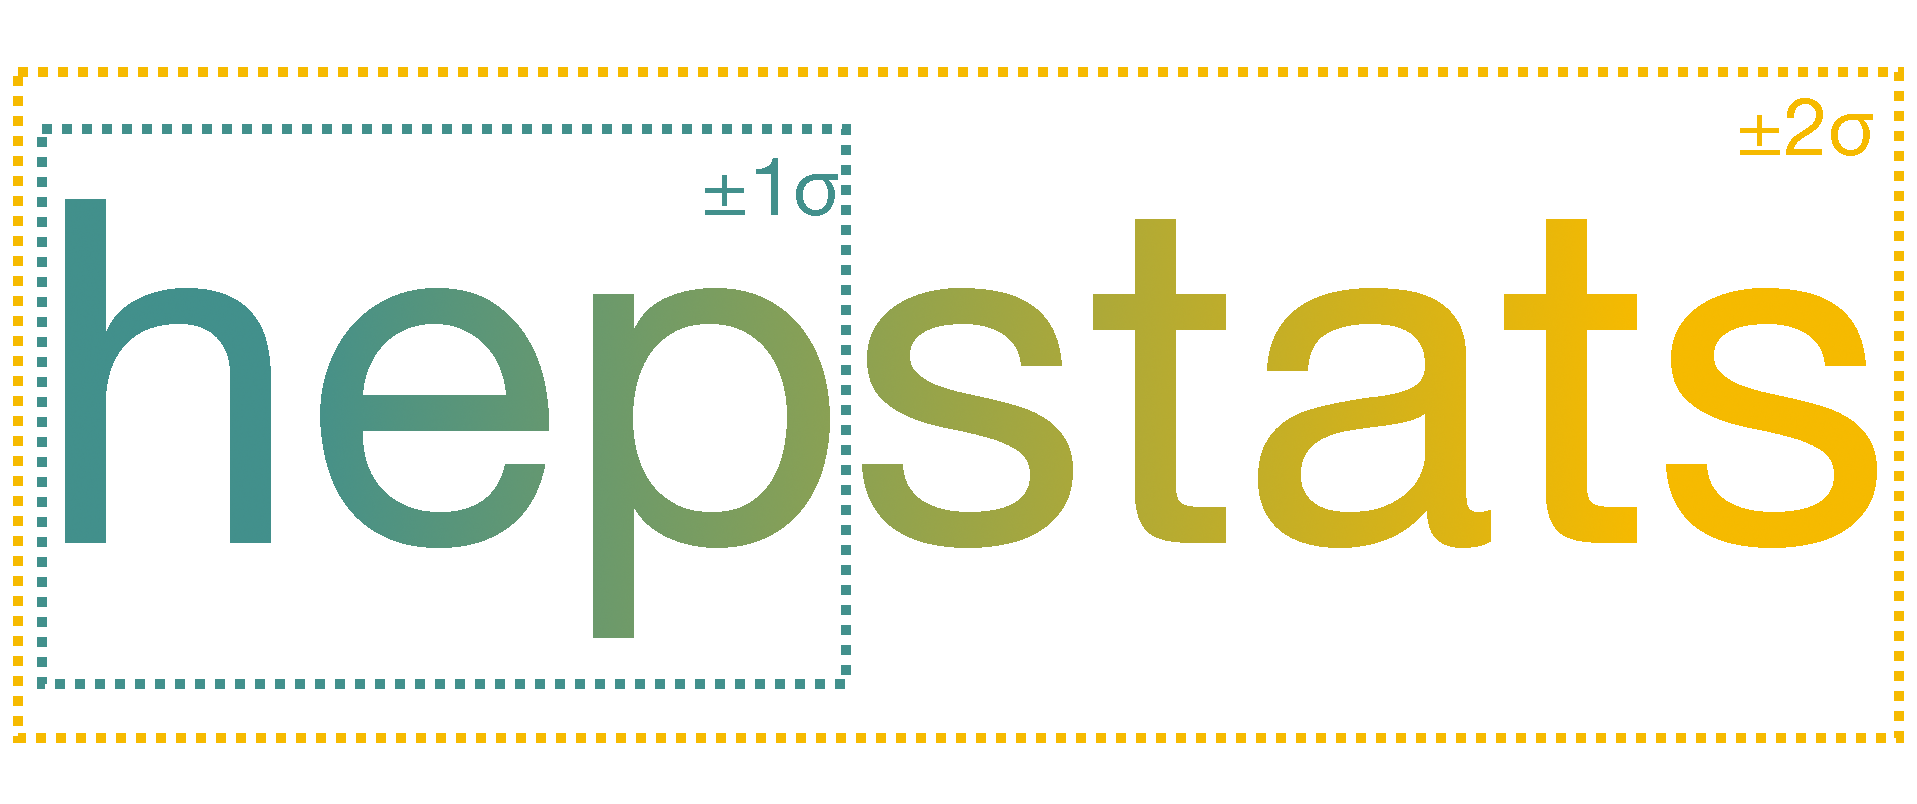 hepstats 0.8.1 documentation - Home